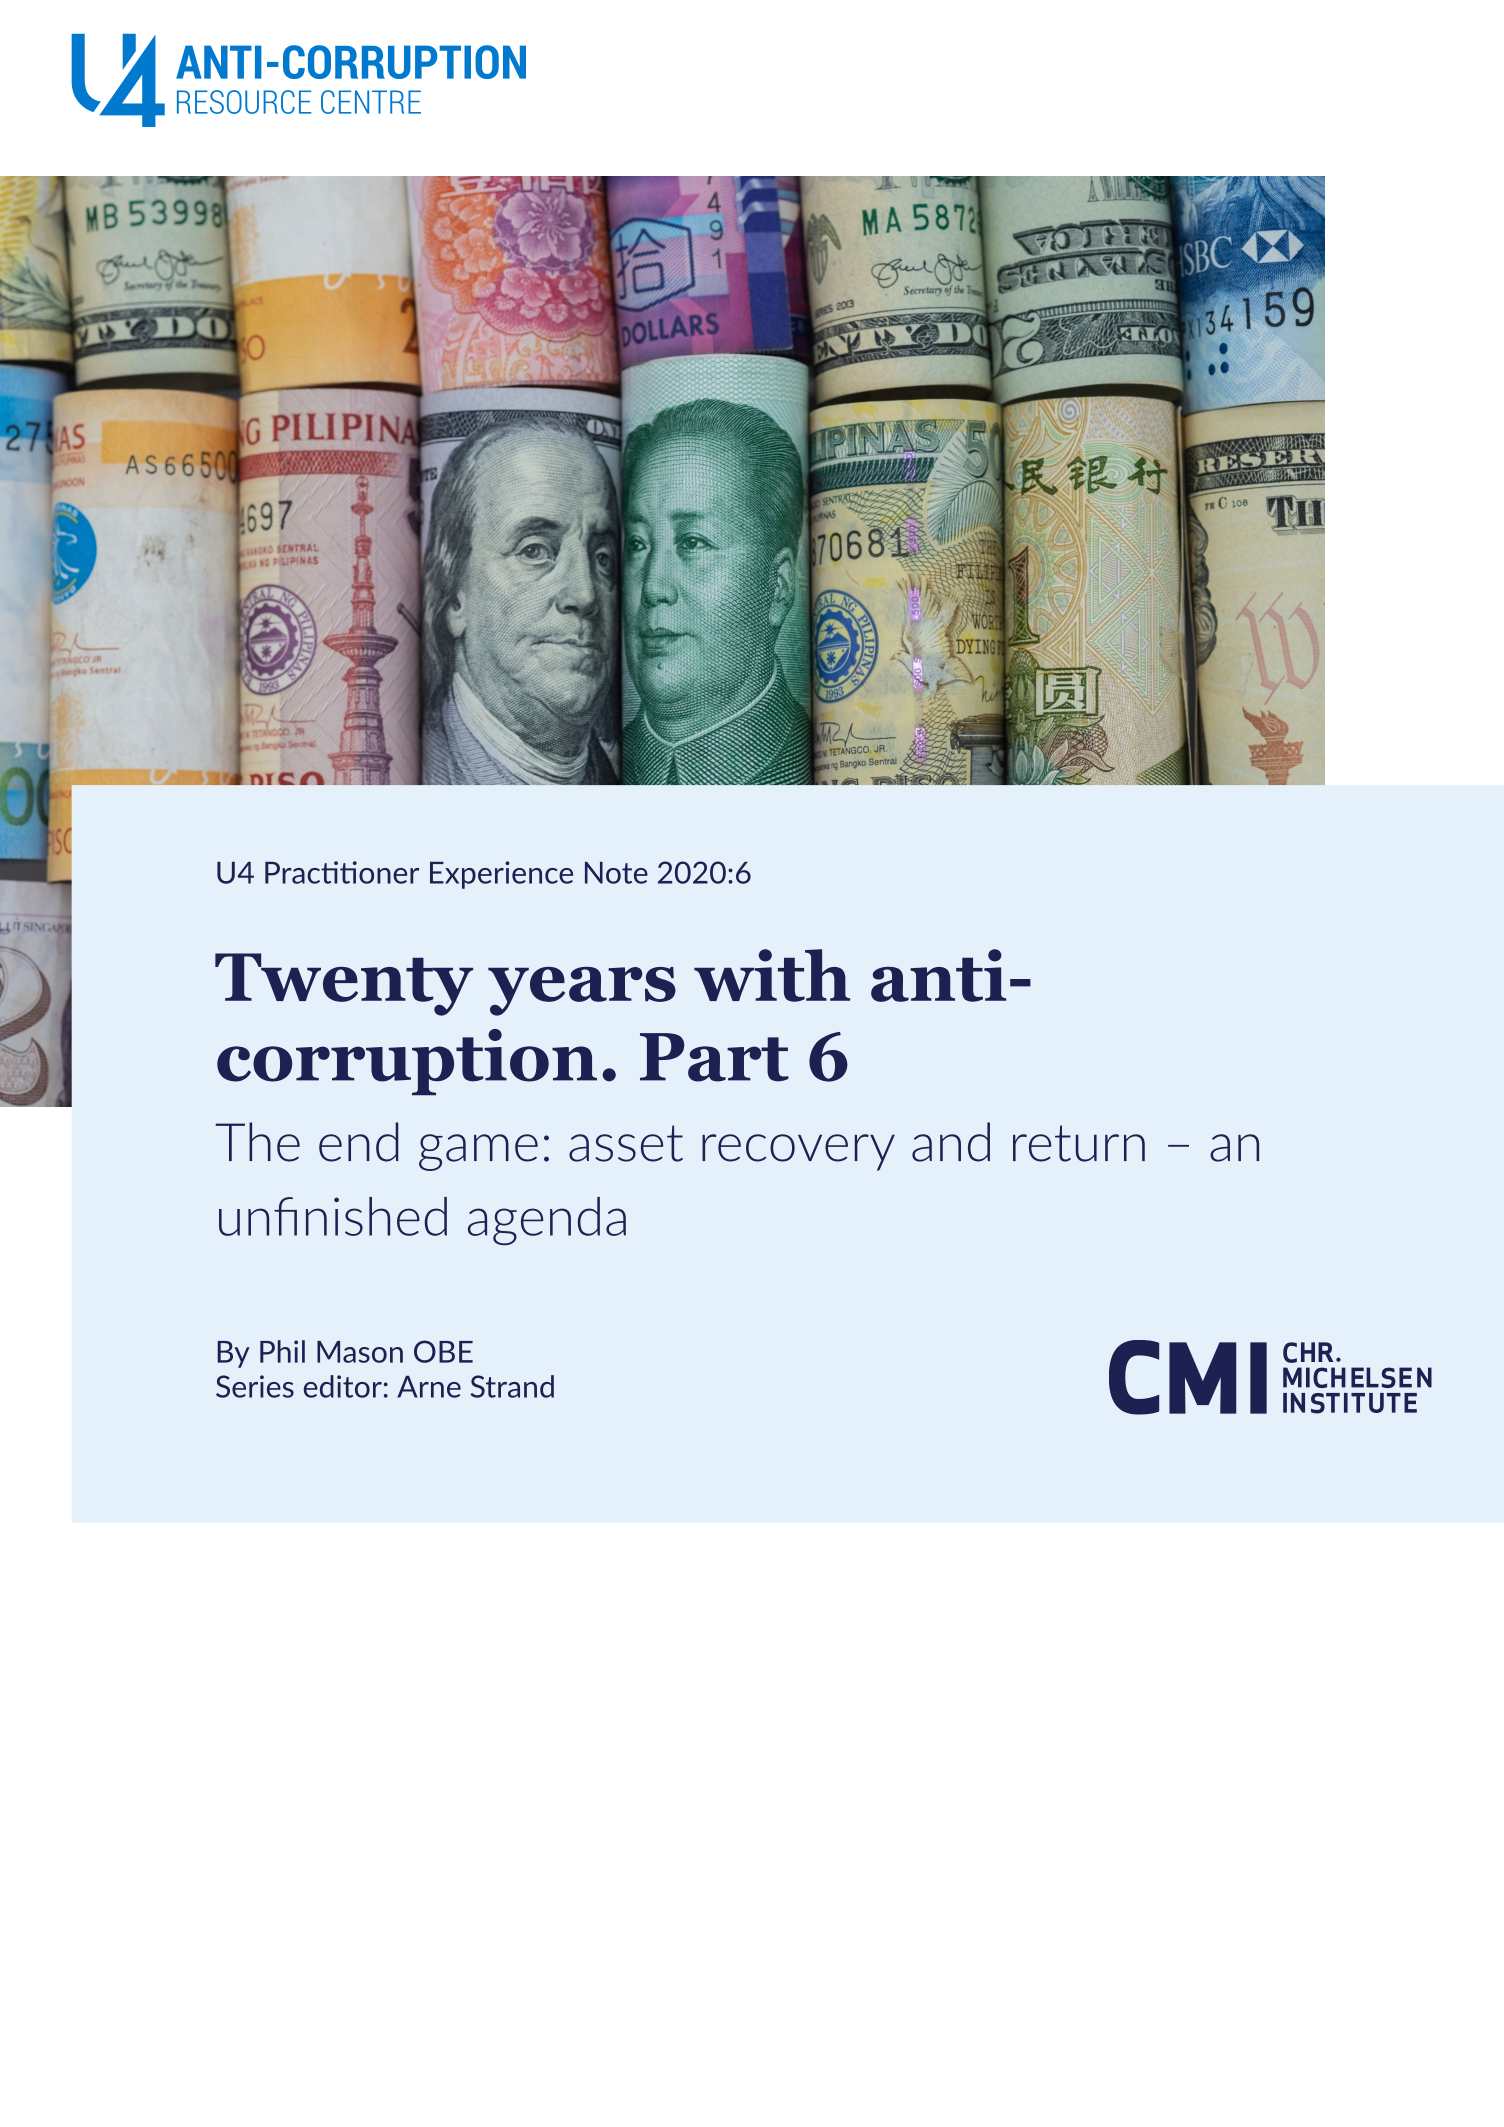 Twenty years with anti-corruption. Part 6